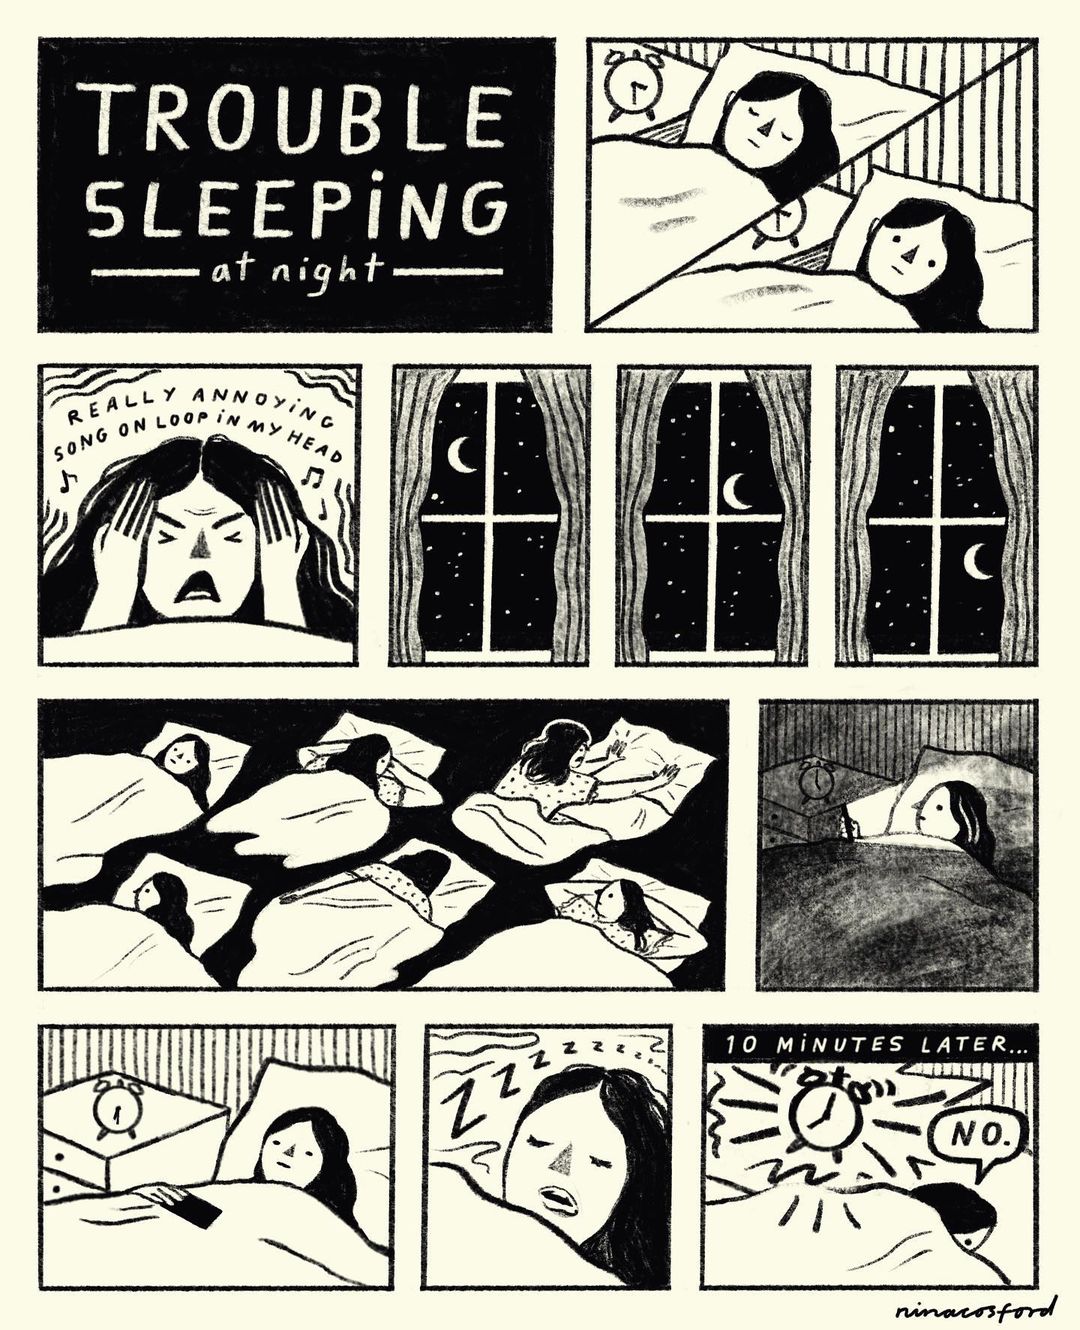 Nina Cosford Illustration - Trouble Sleeping Comic